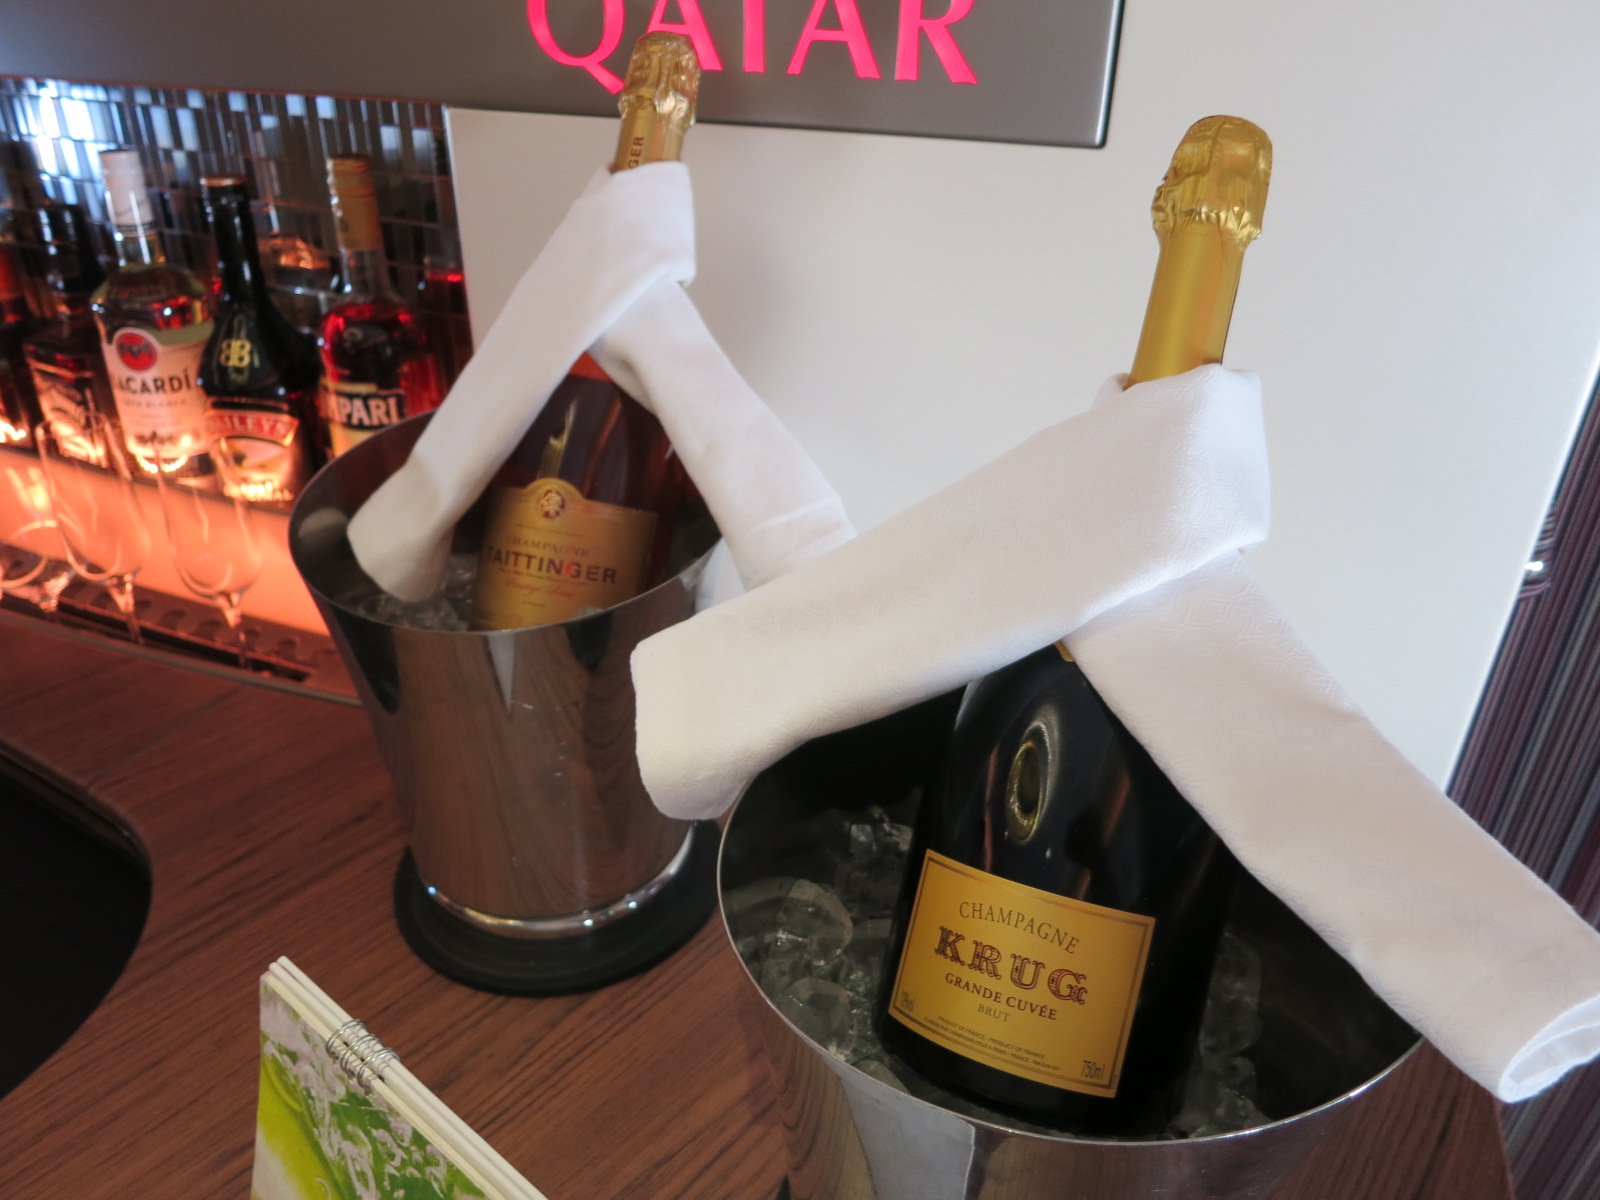 Qatar Airways A380 first class bar Bangkok-Doha